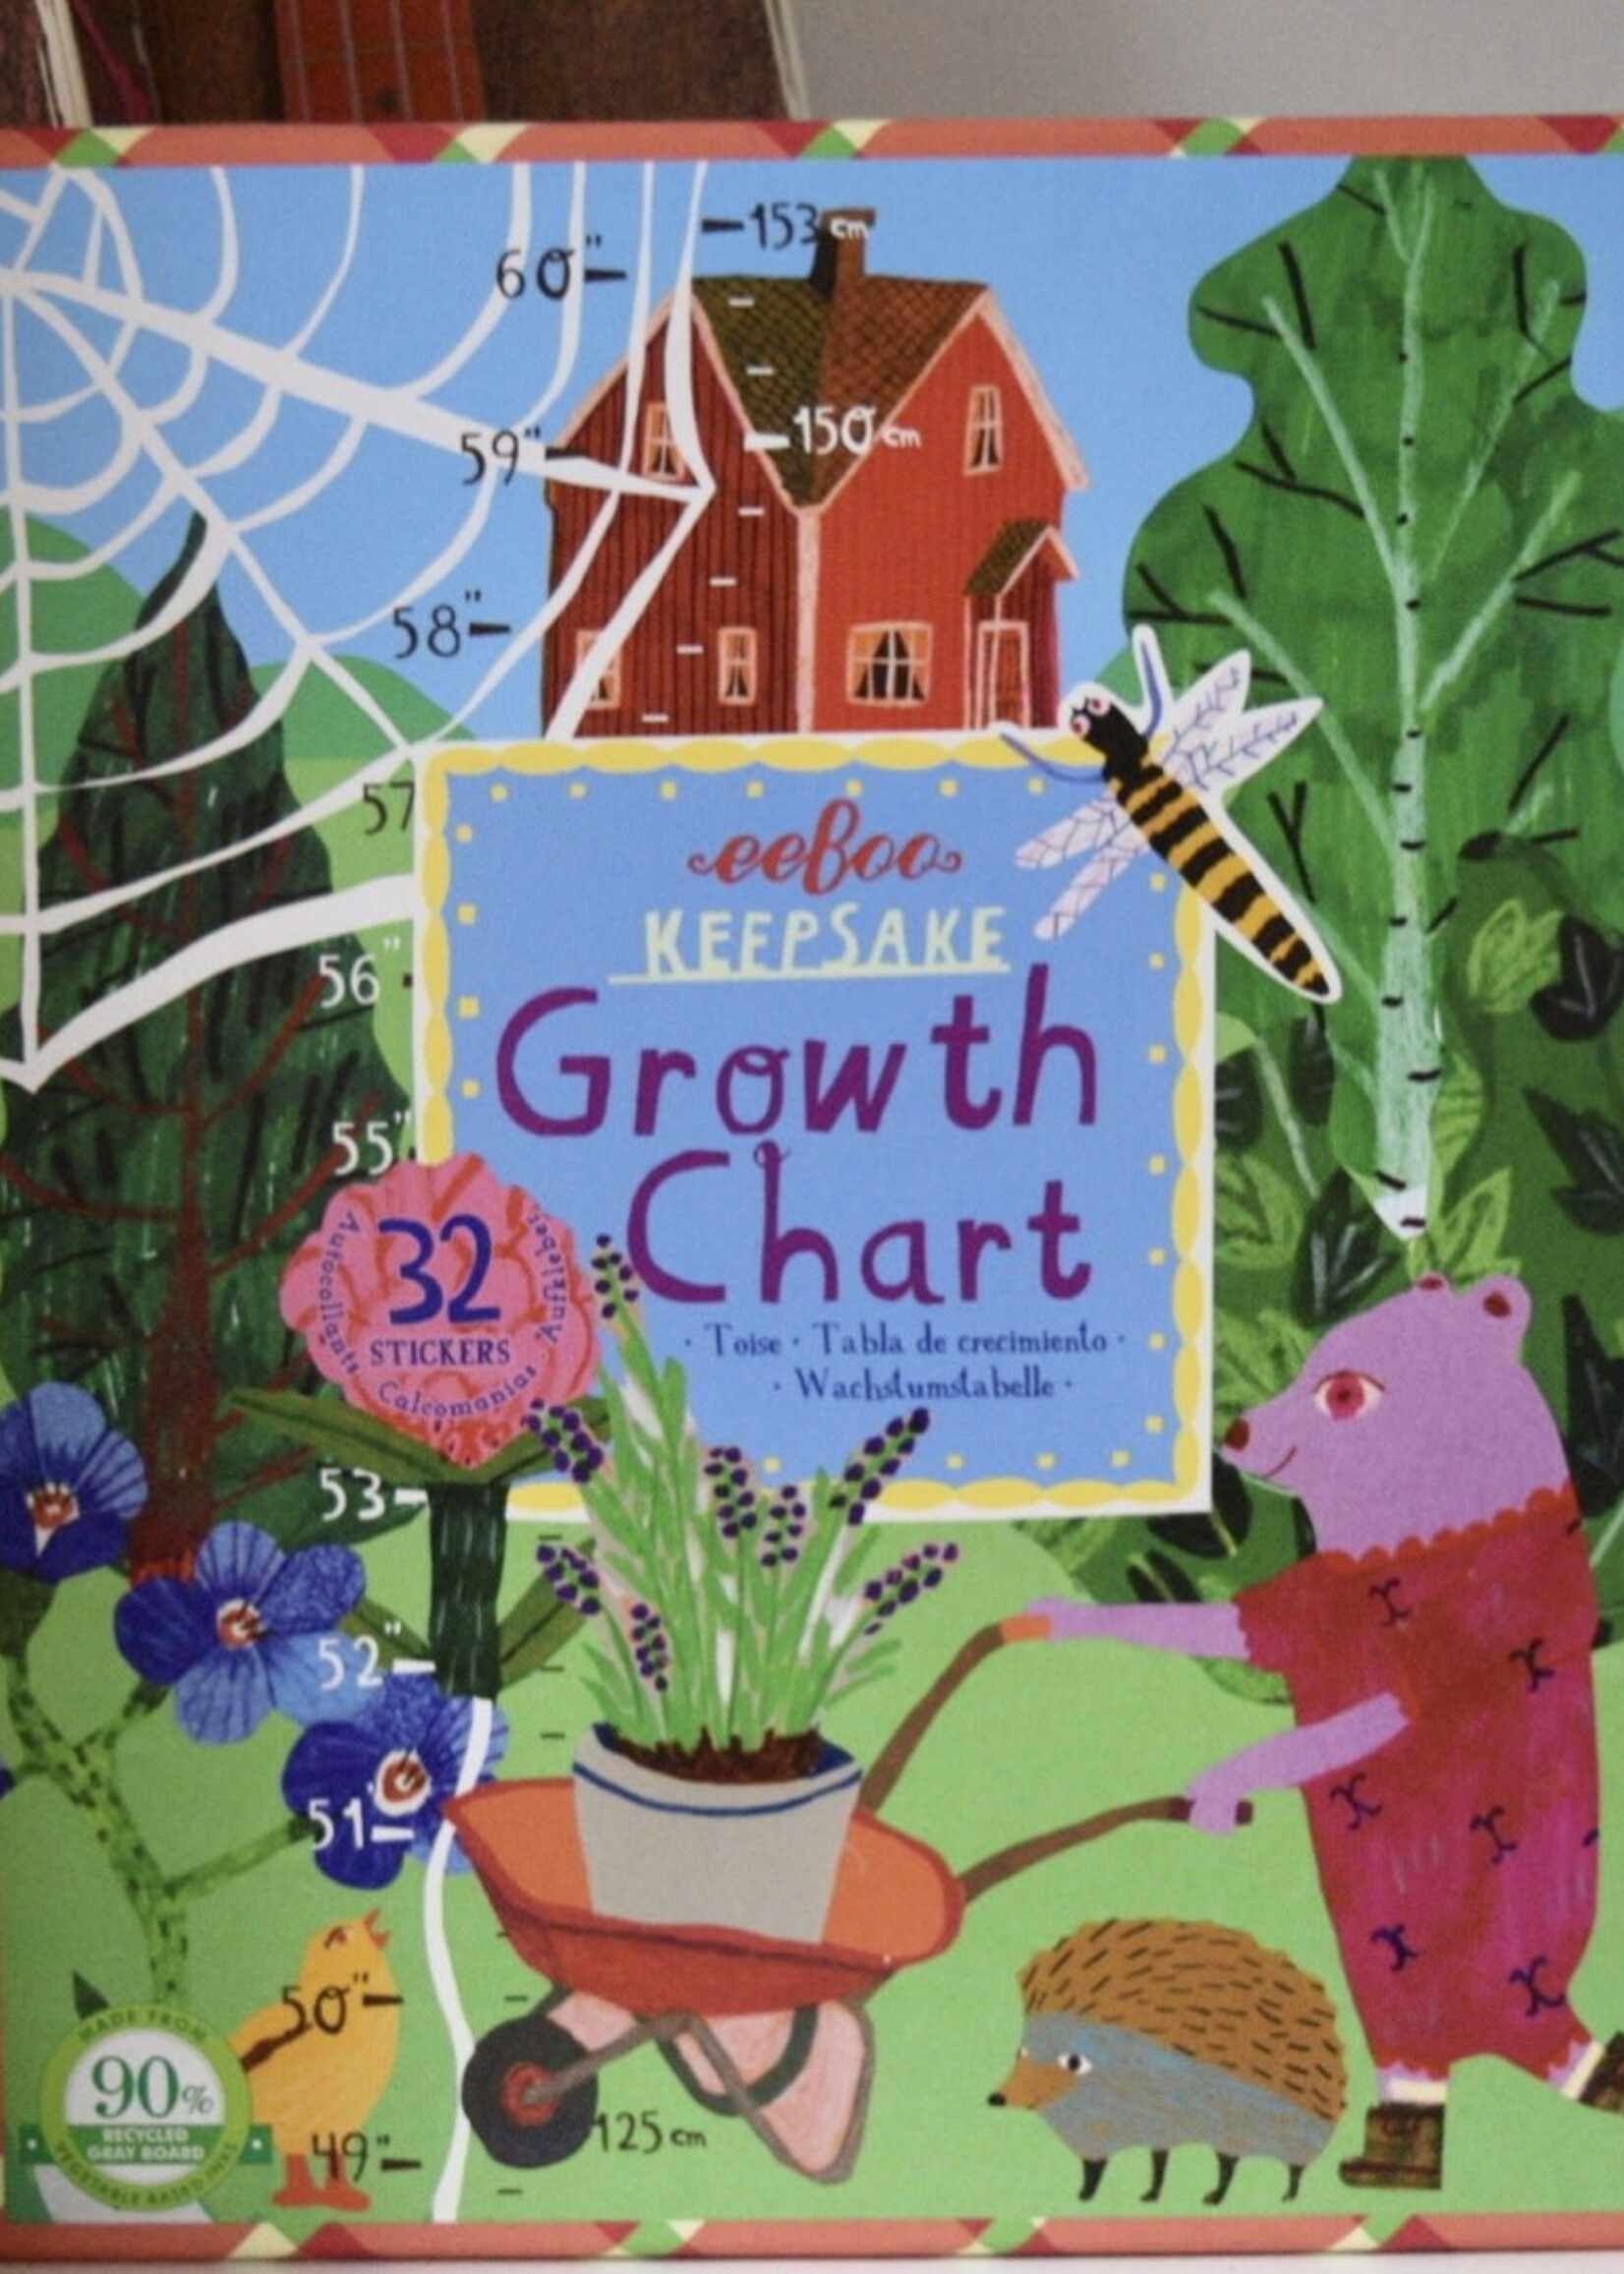 Growth Chart - Making the Garden